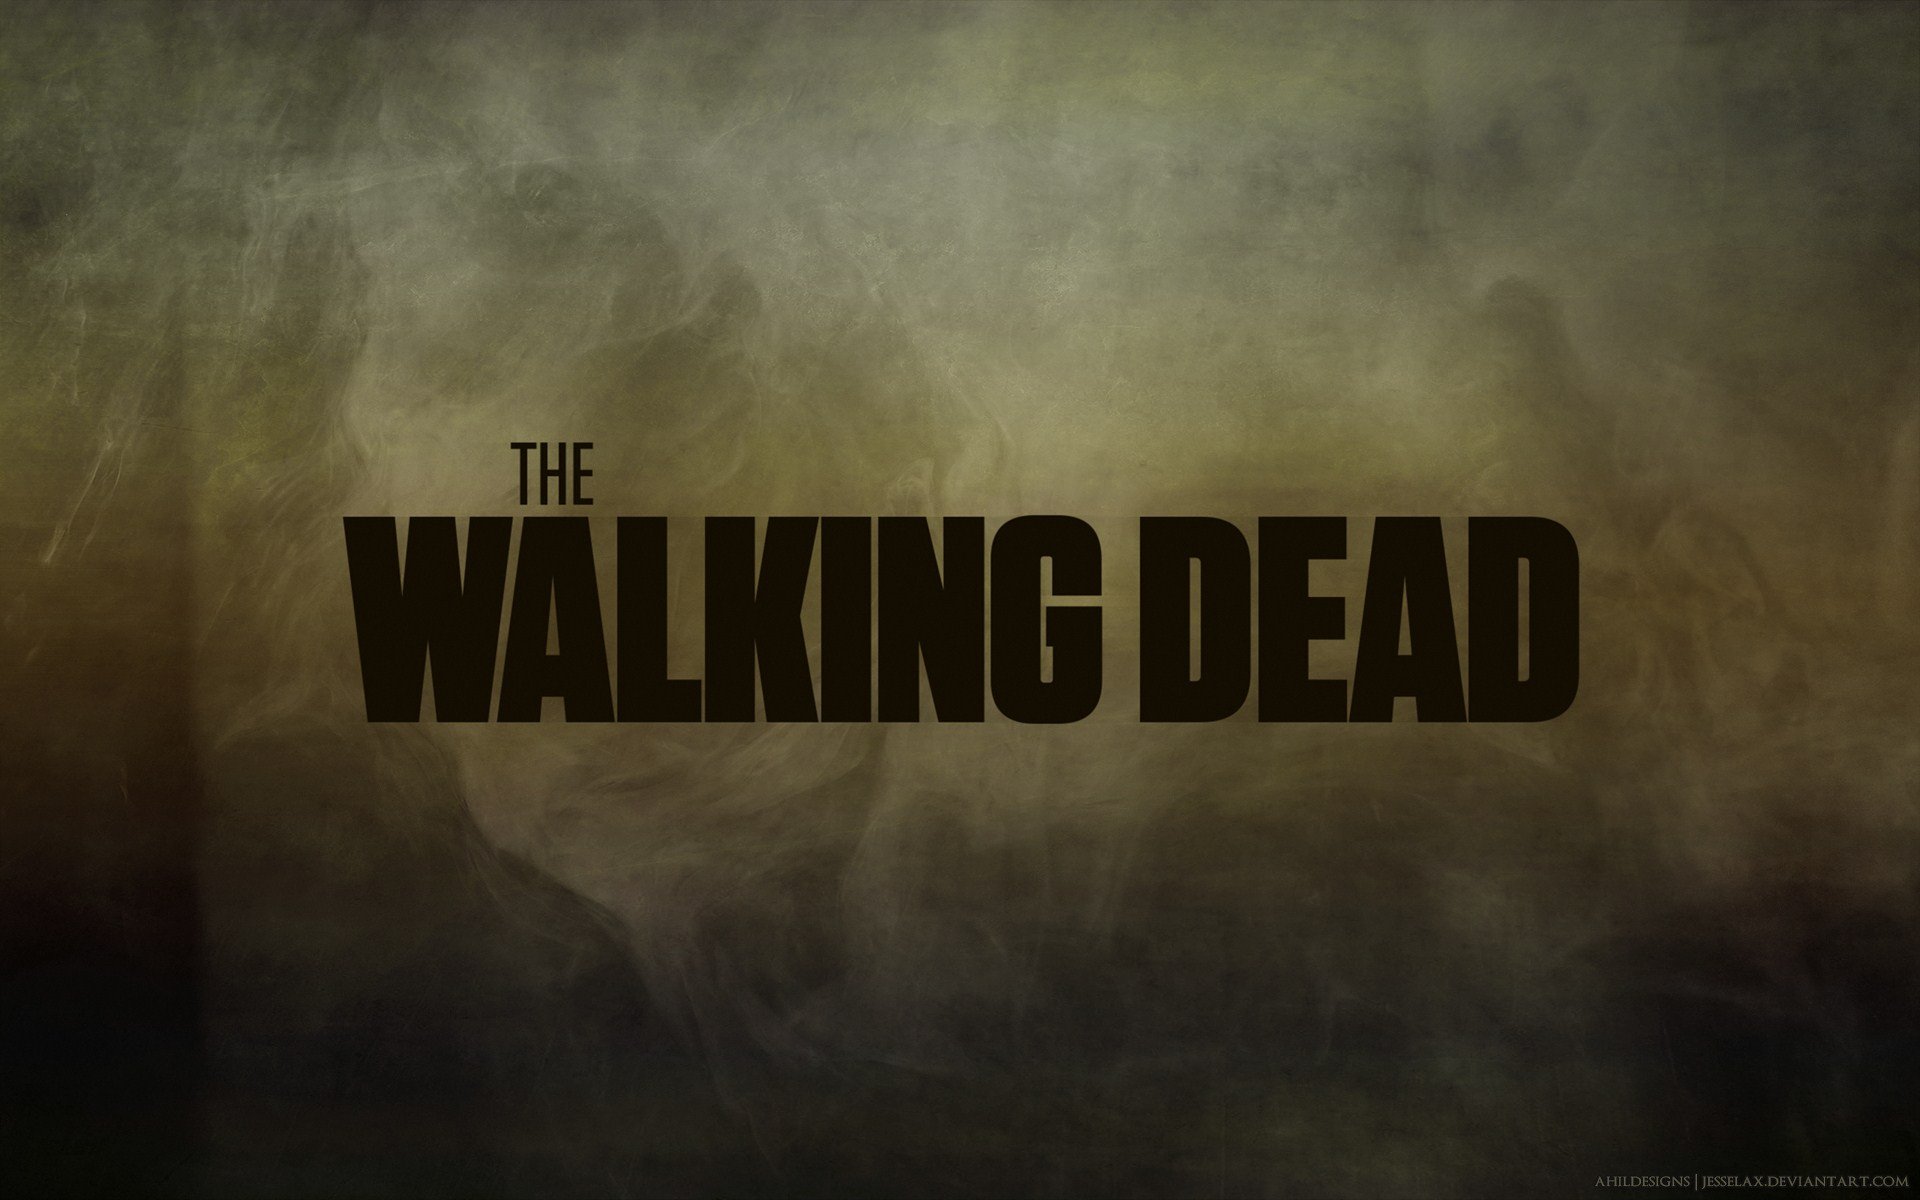 The Walking Dead Wallpaper HD Amazing 1t4u40rk   Yoanucom